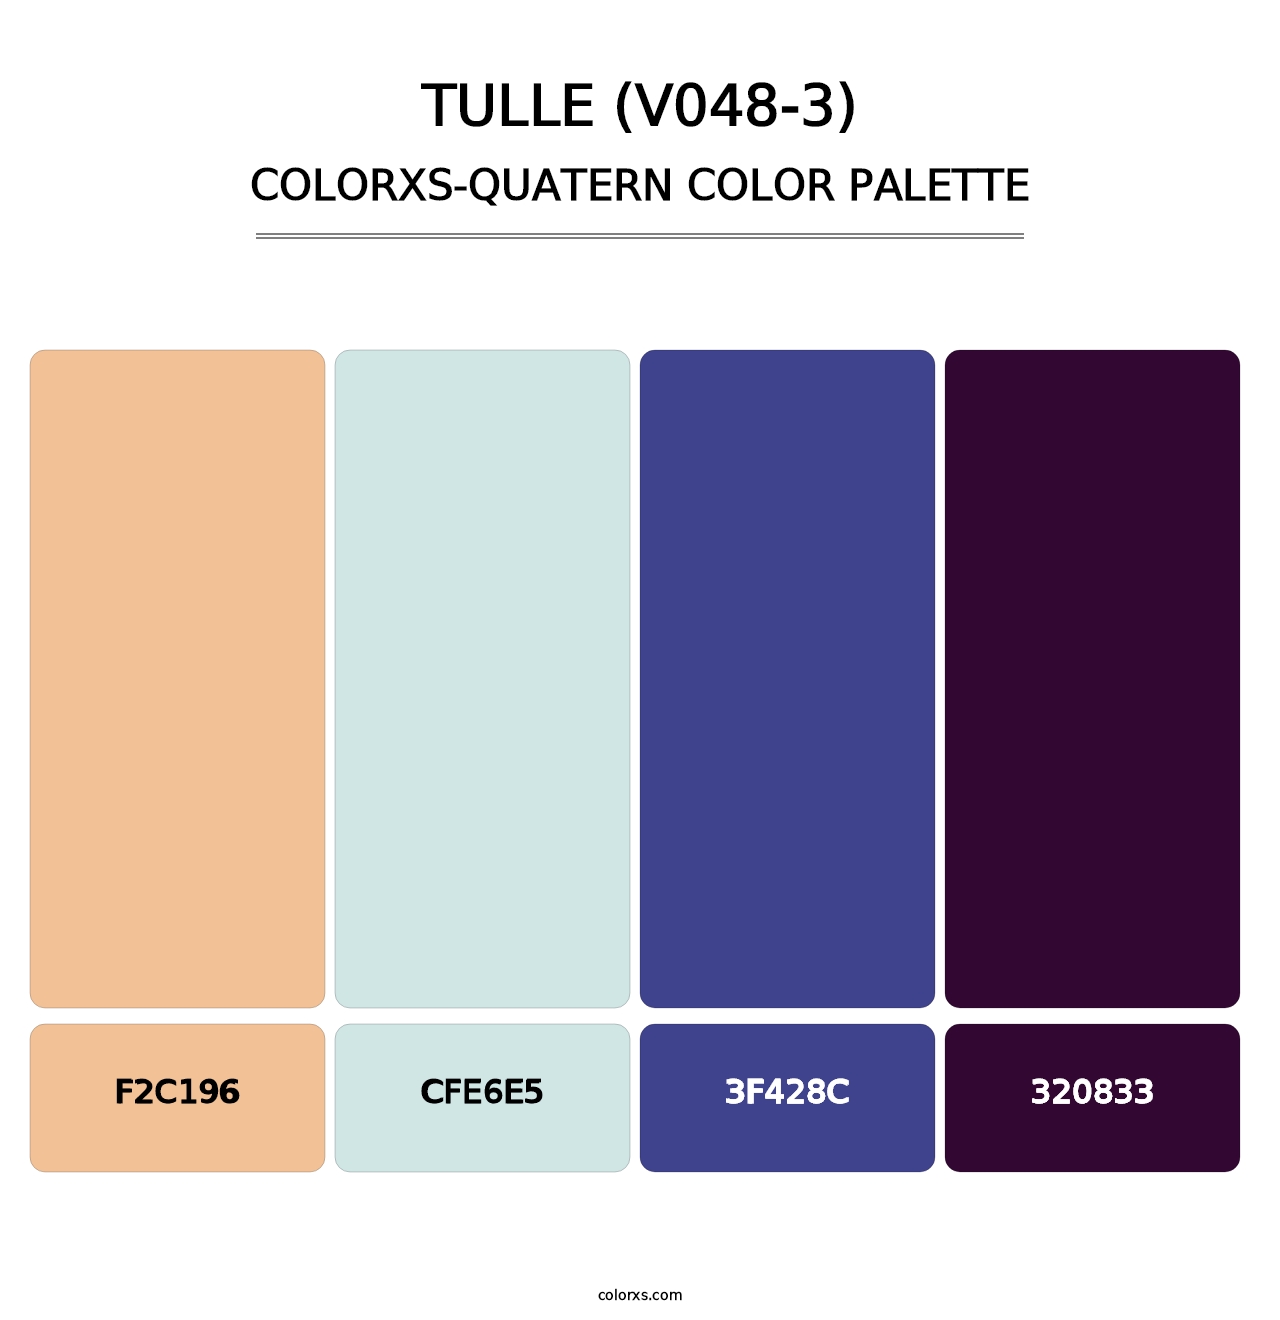 Tulle (V048-3) - Colorxs Quatern Palette